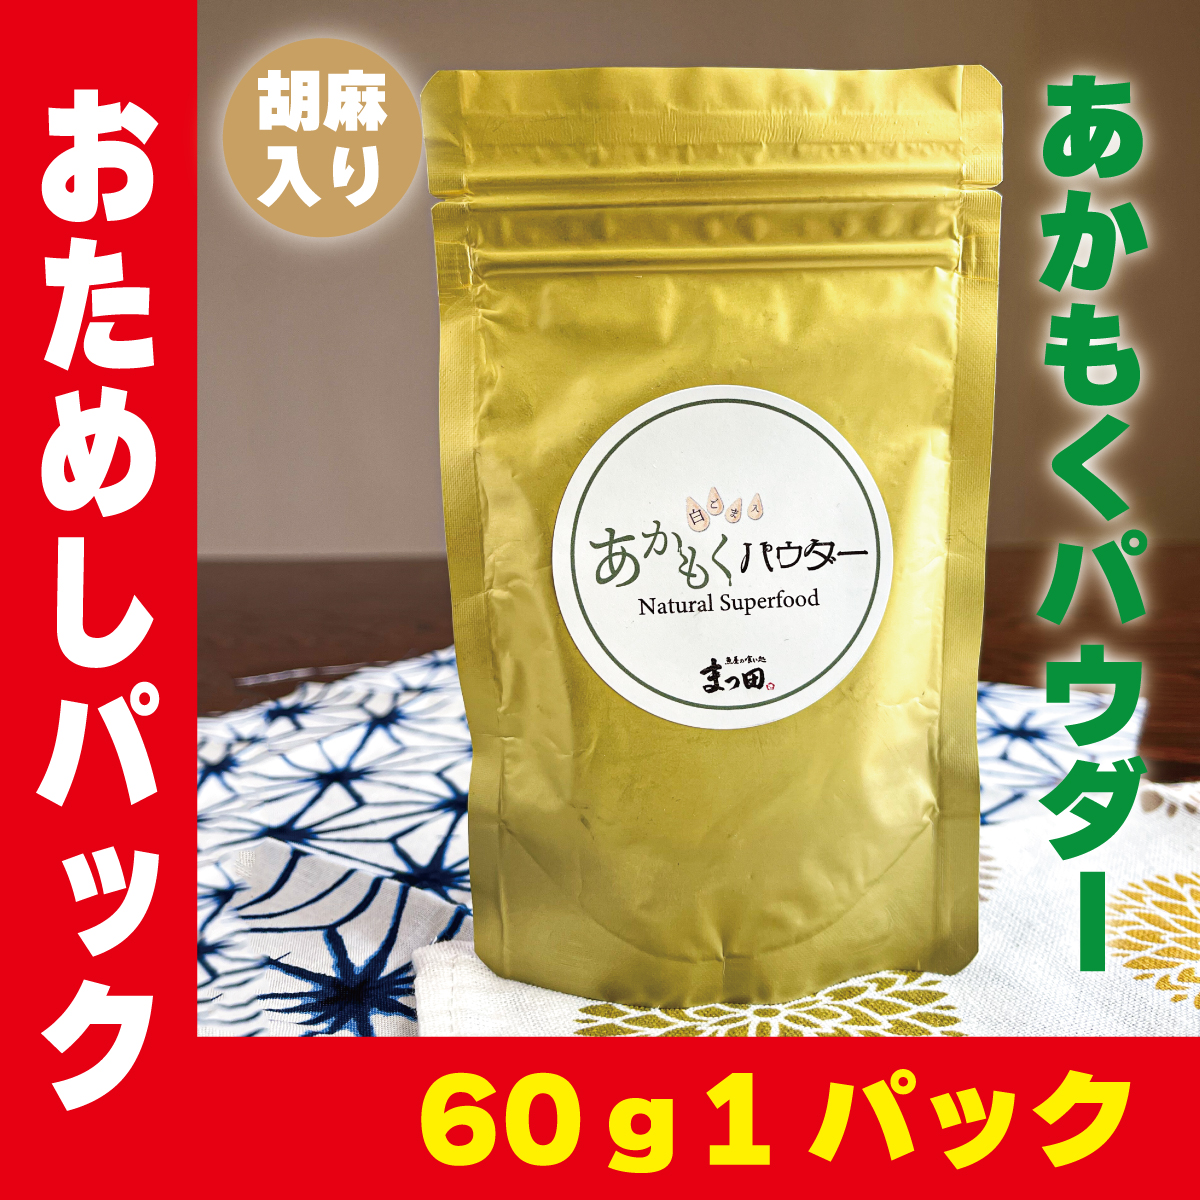 ..naigochiyabe коричневый n man ....a утка kgibasa...... порошок 60g 1 упаковка тест ... . материал . поэтому . цена без добавок ... тоже ... Echizen производство 